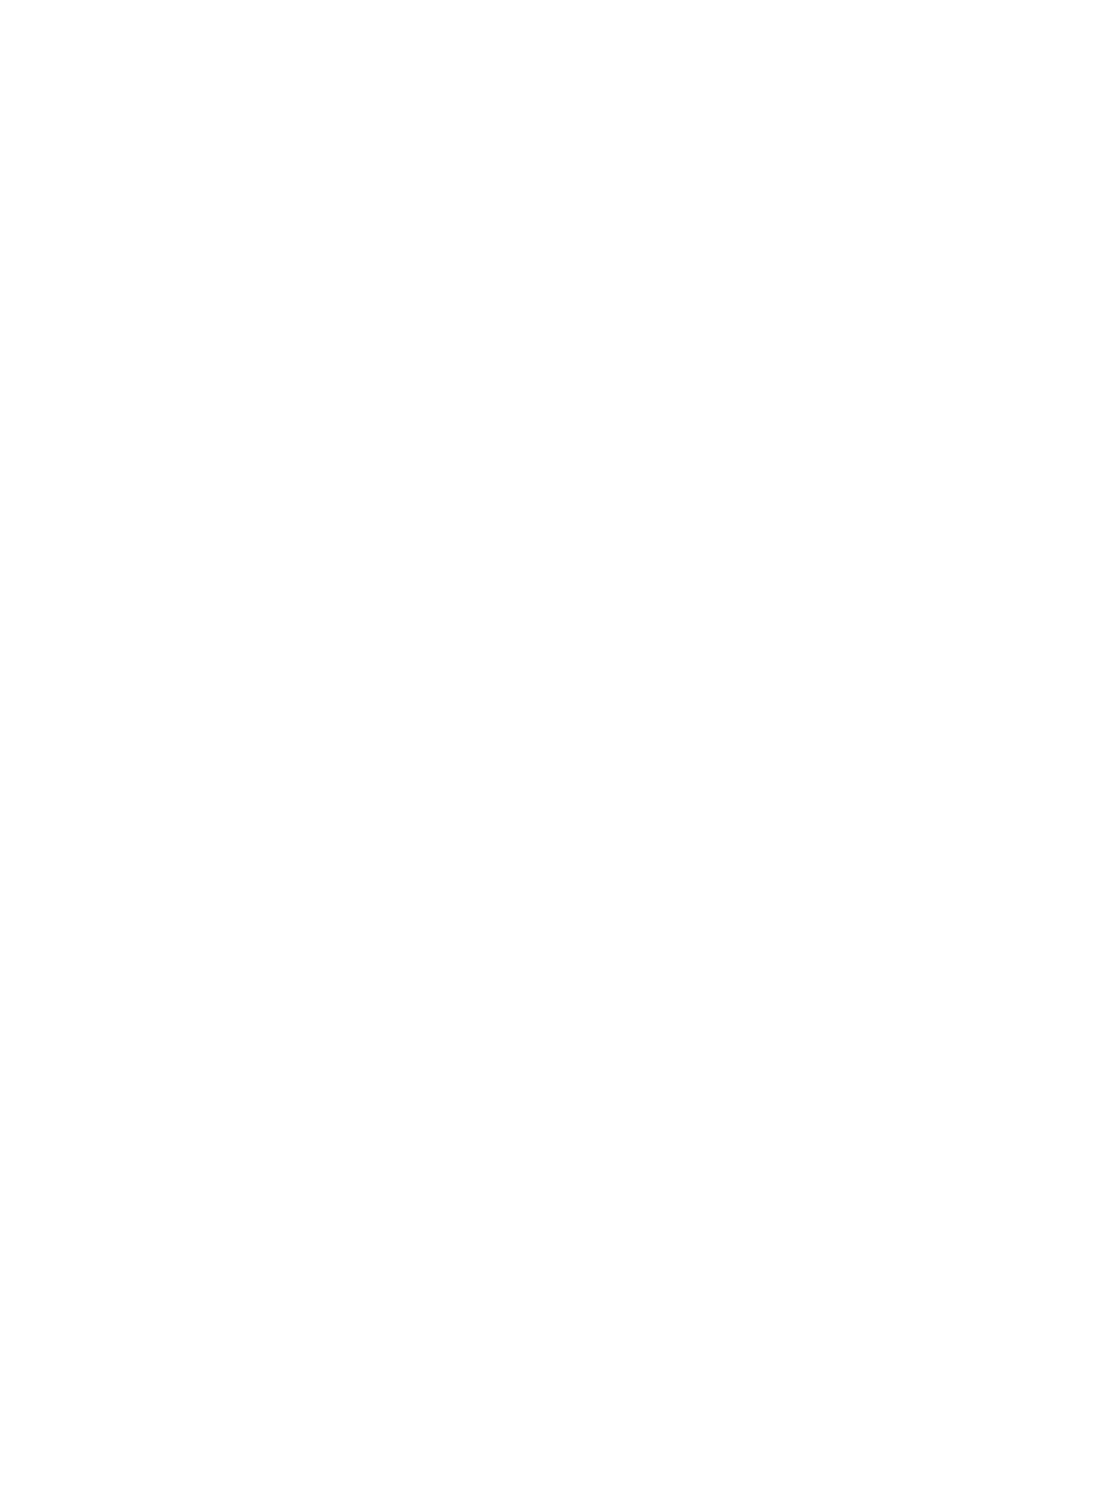 Asahi Group logo pour fonds sombres (PNG transparent)